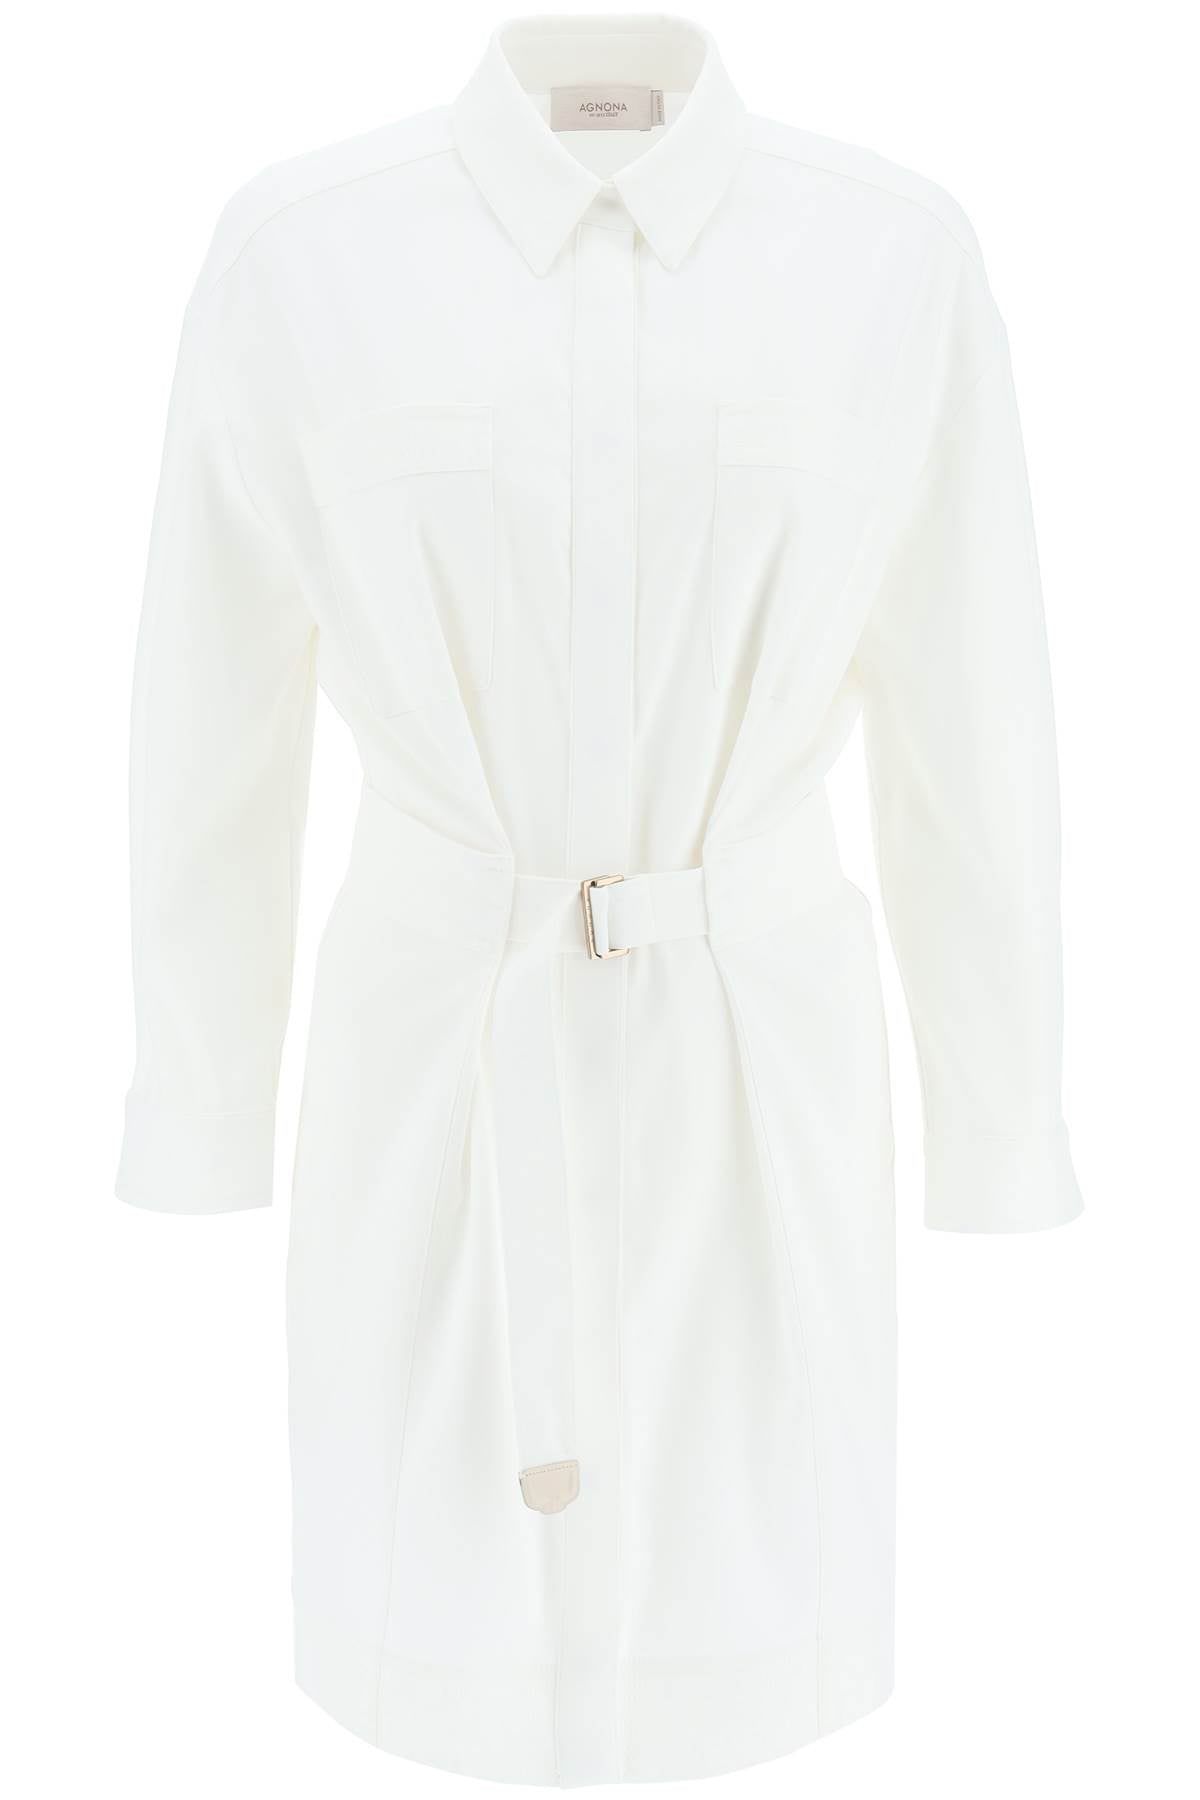 Agnona Belted Twill Shirt Dress   White